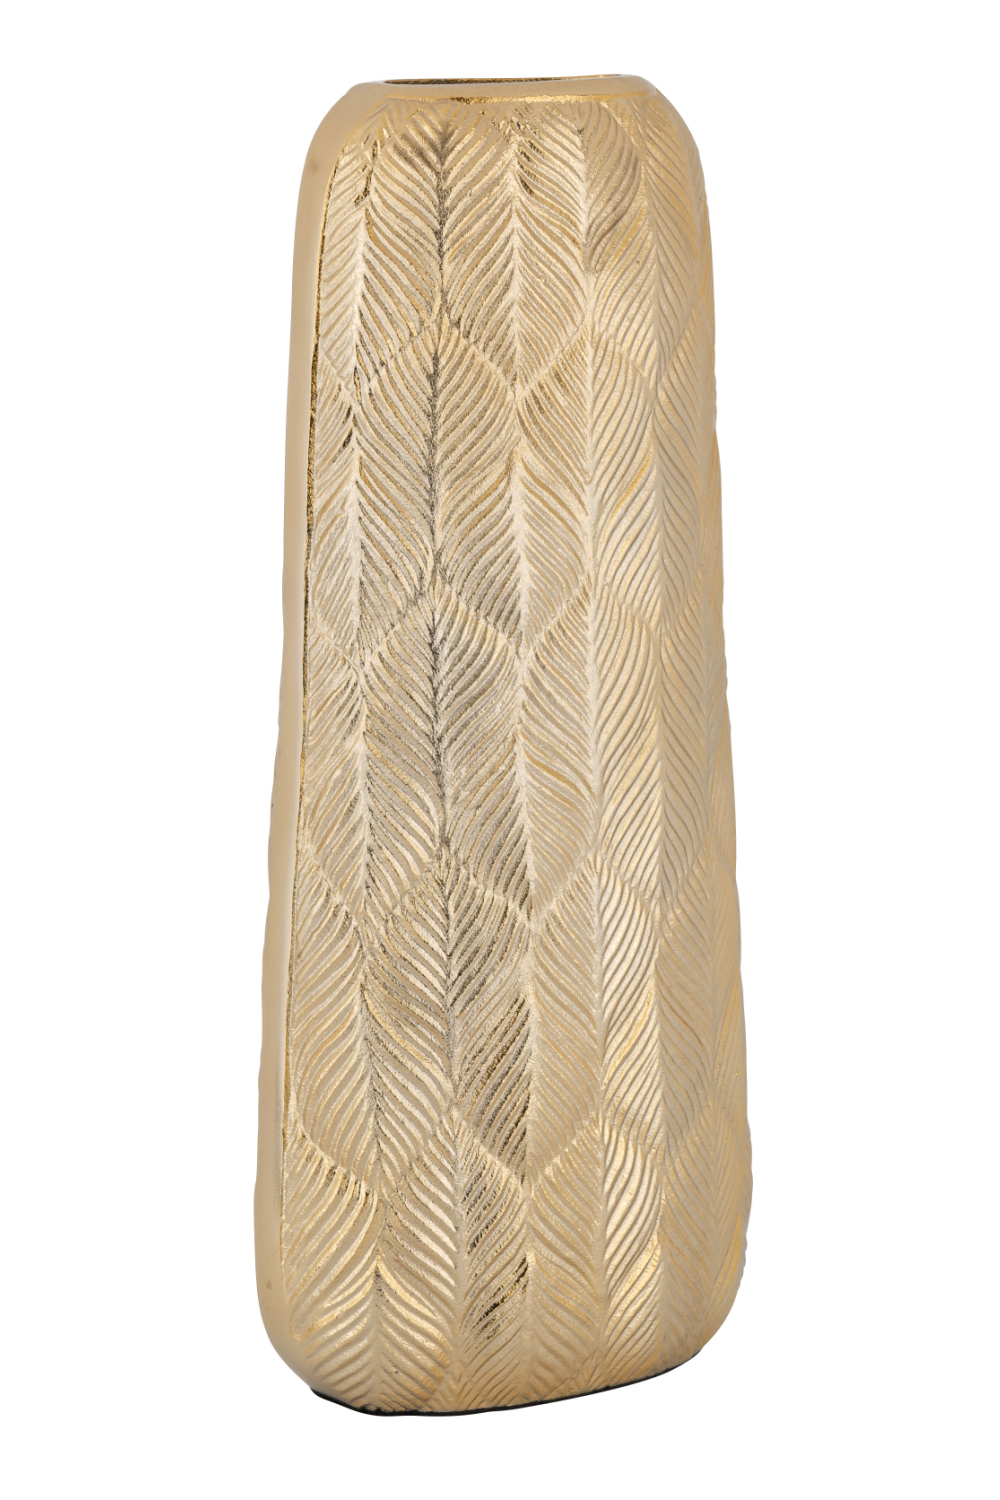 Gold Aluminum Hand-Carved Vase L | OROA Mirthe | OROA.com